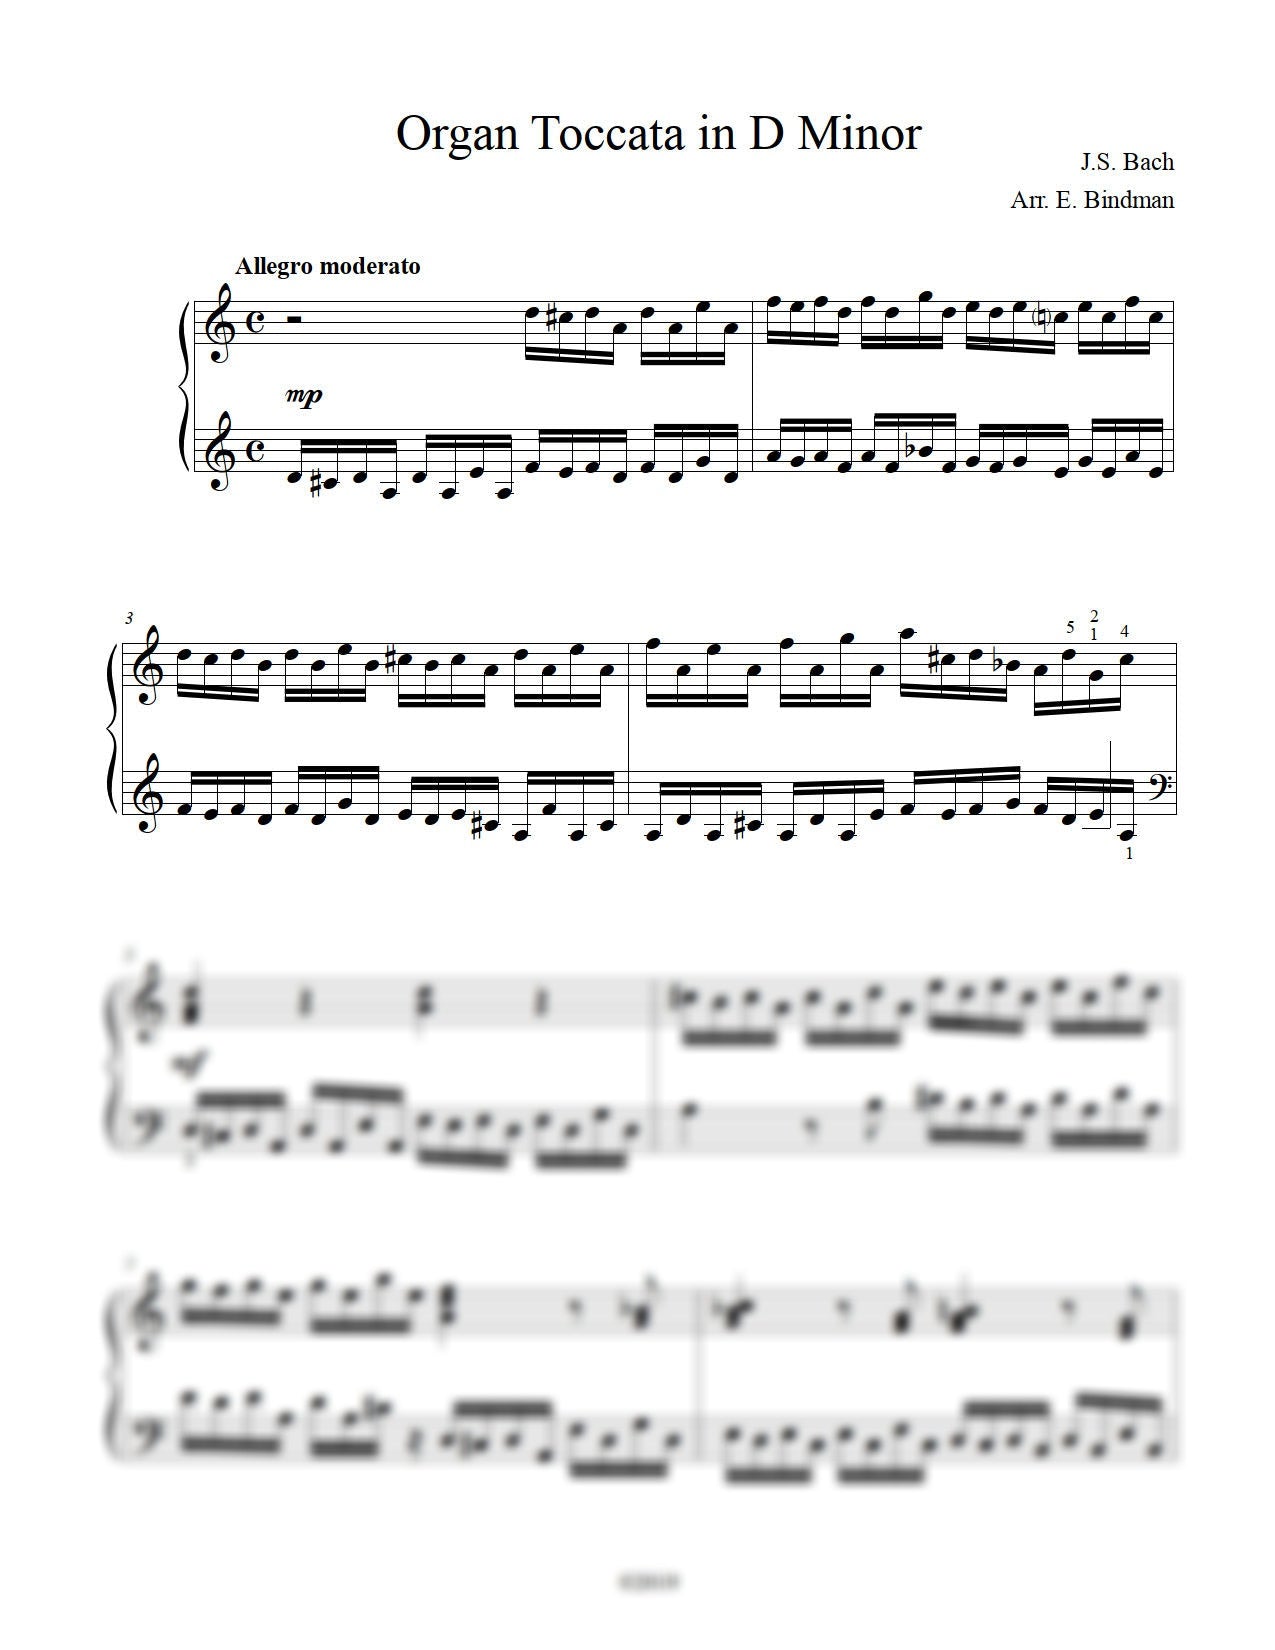 J.S. Bach: Organ Toccata in D Minor, BWV 538 arranged for piano by Eleonor Bindman (GPC067)